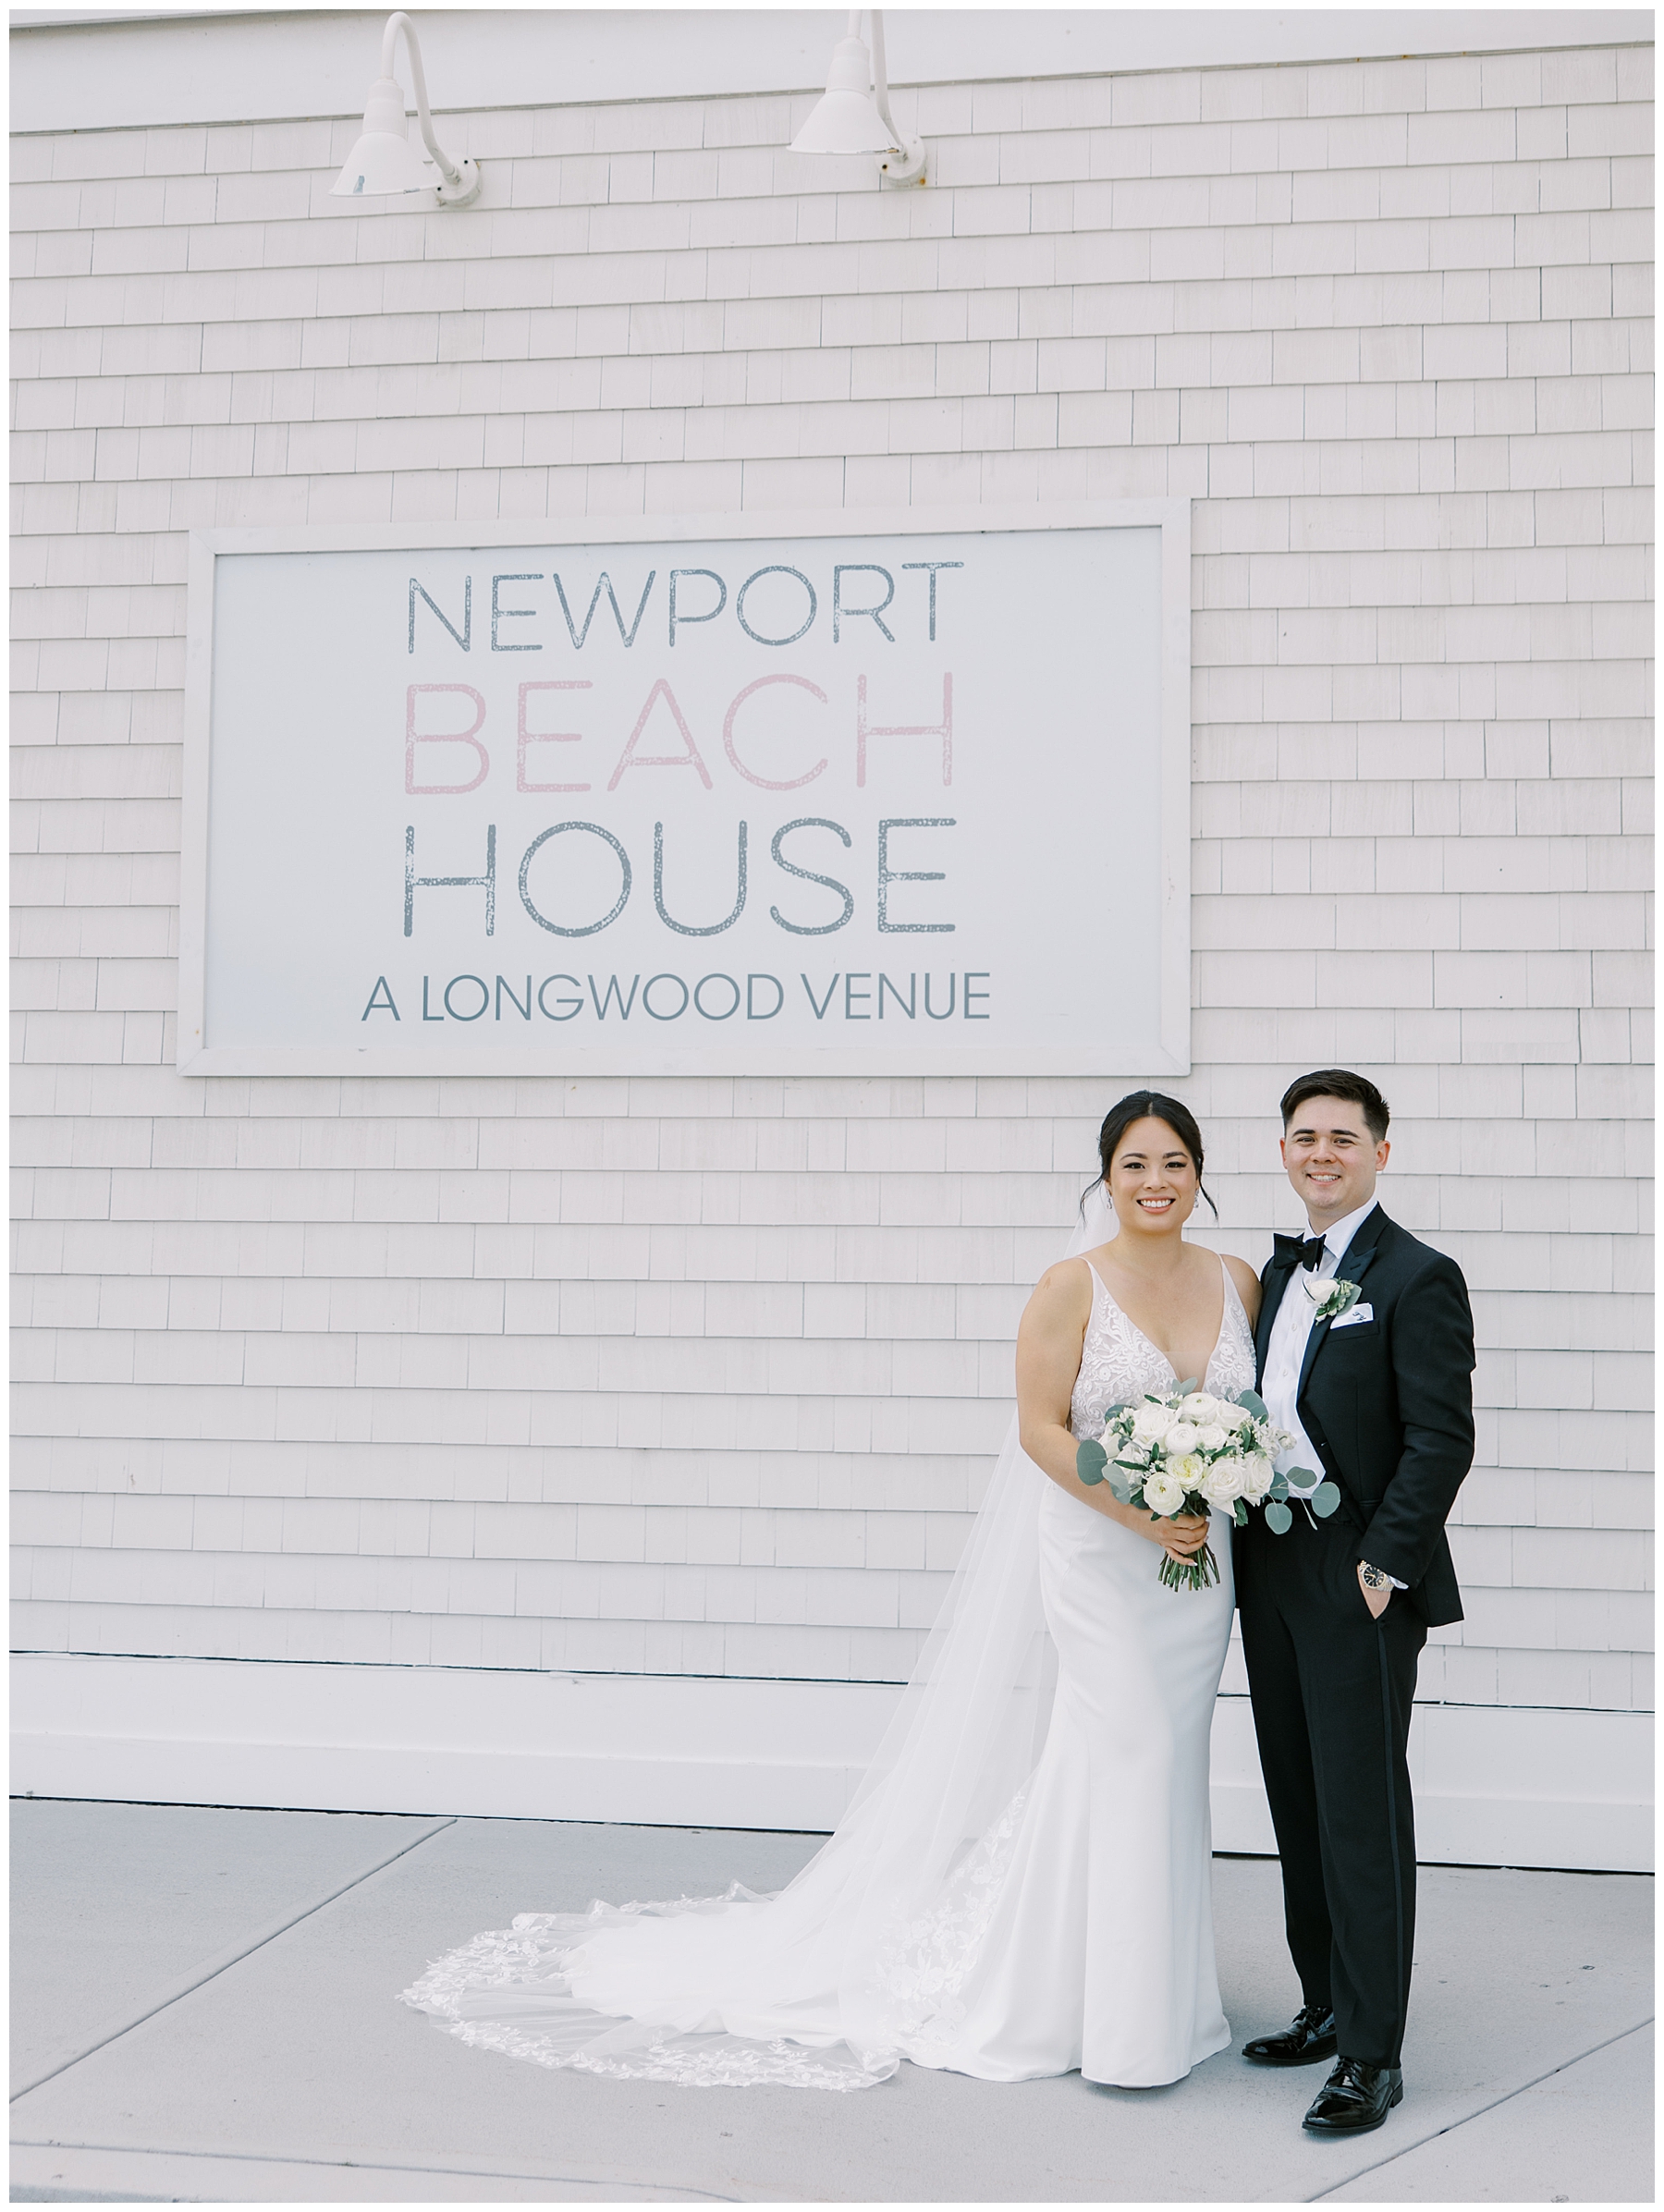 Newport Beach House Wedding portraits